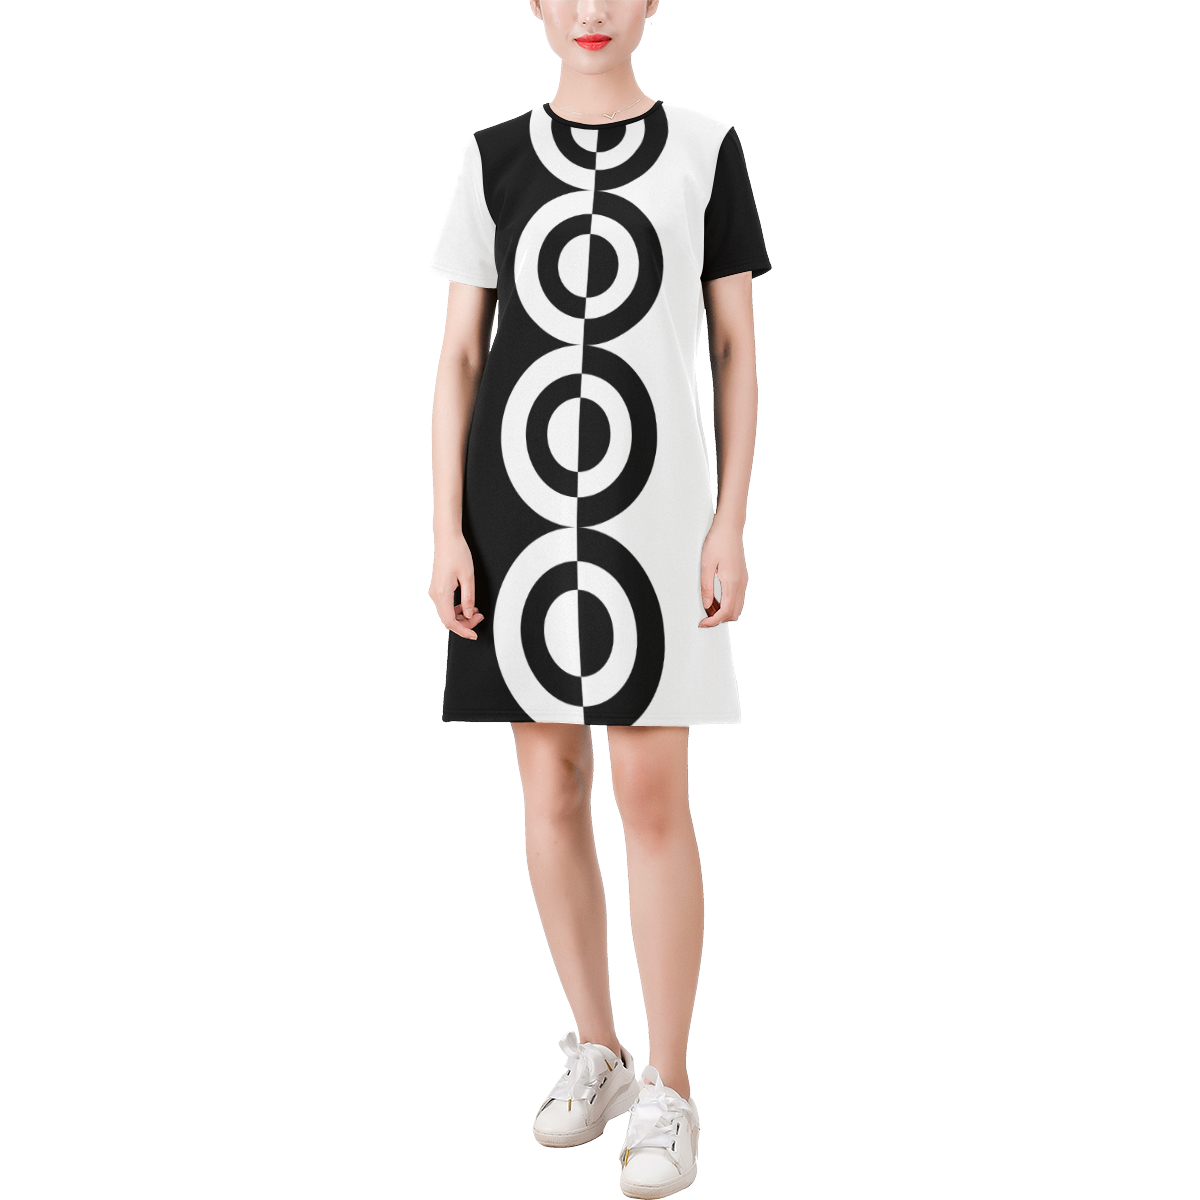 Retro Mod Targets Black and White by ArtformDesigns Short-Sleeve Round Neck A-Line Dress (Model D47)